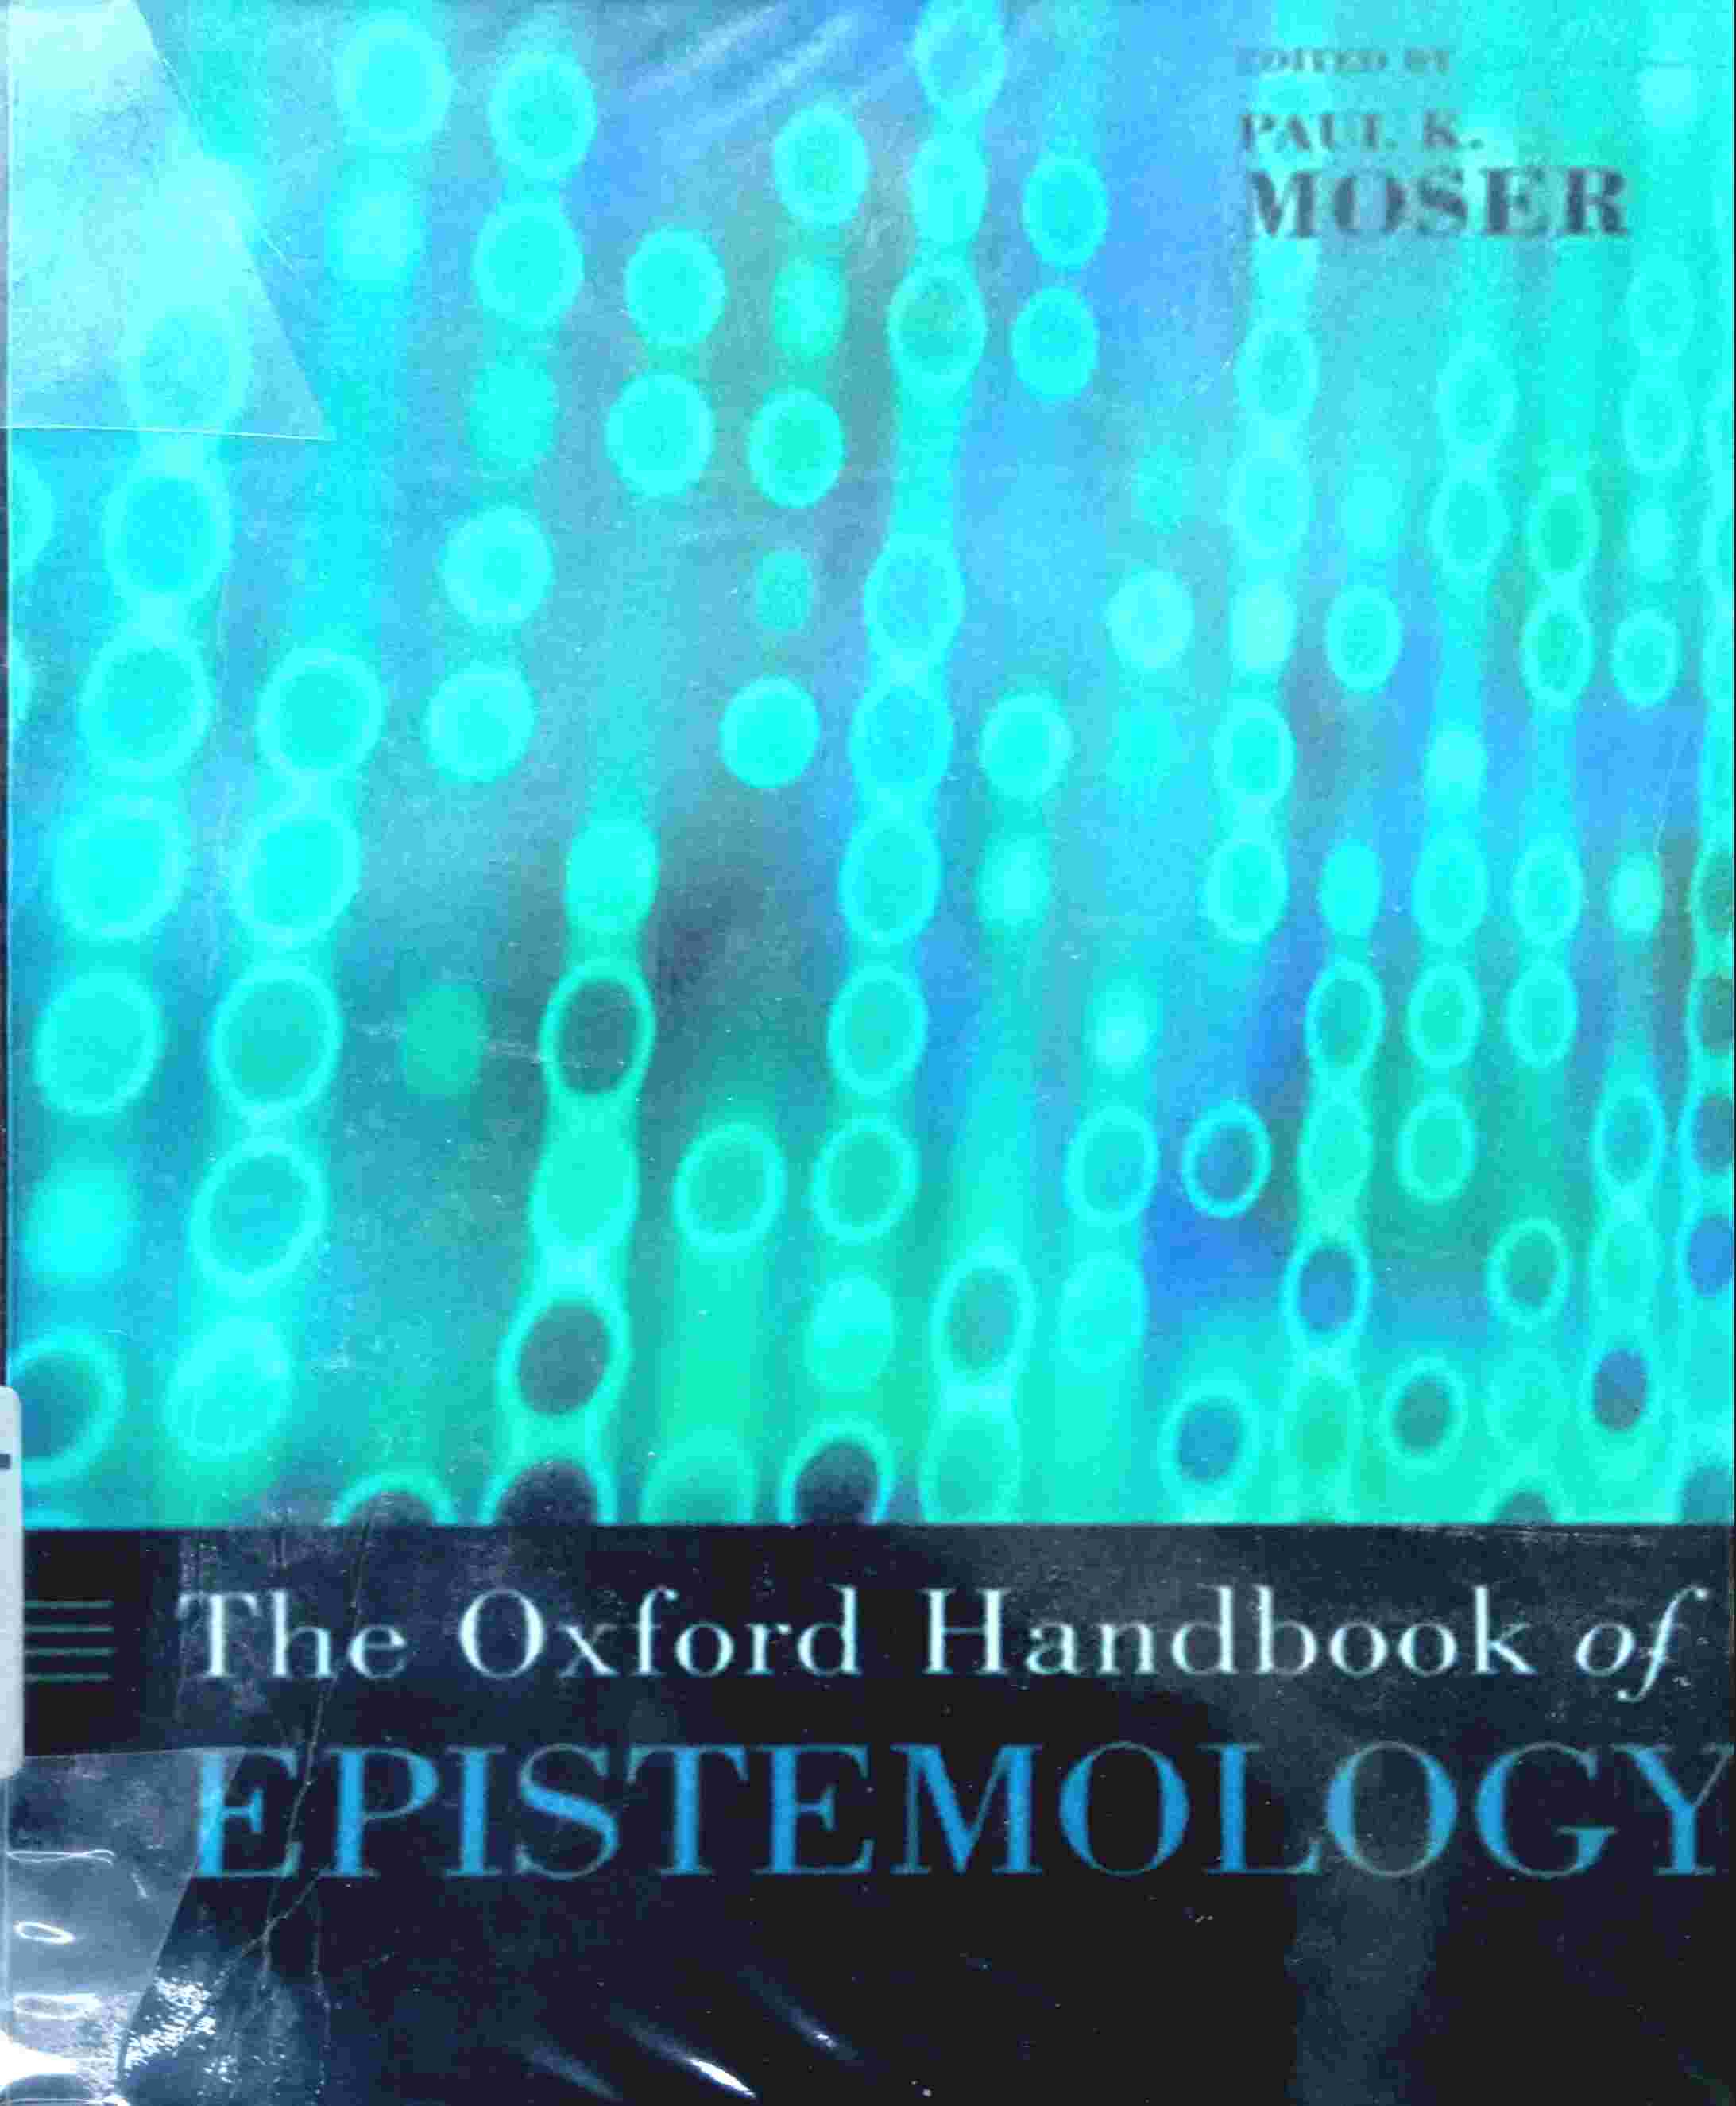 THE OXFORD HANDBOOK OF EPISTEMOLOGY